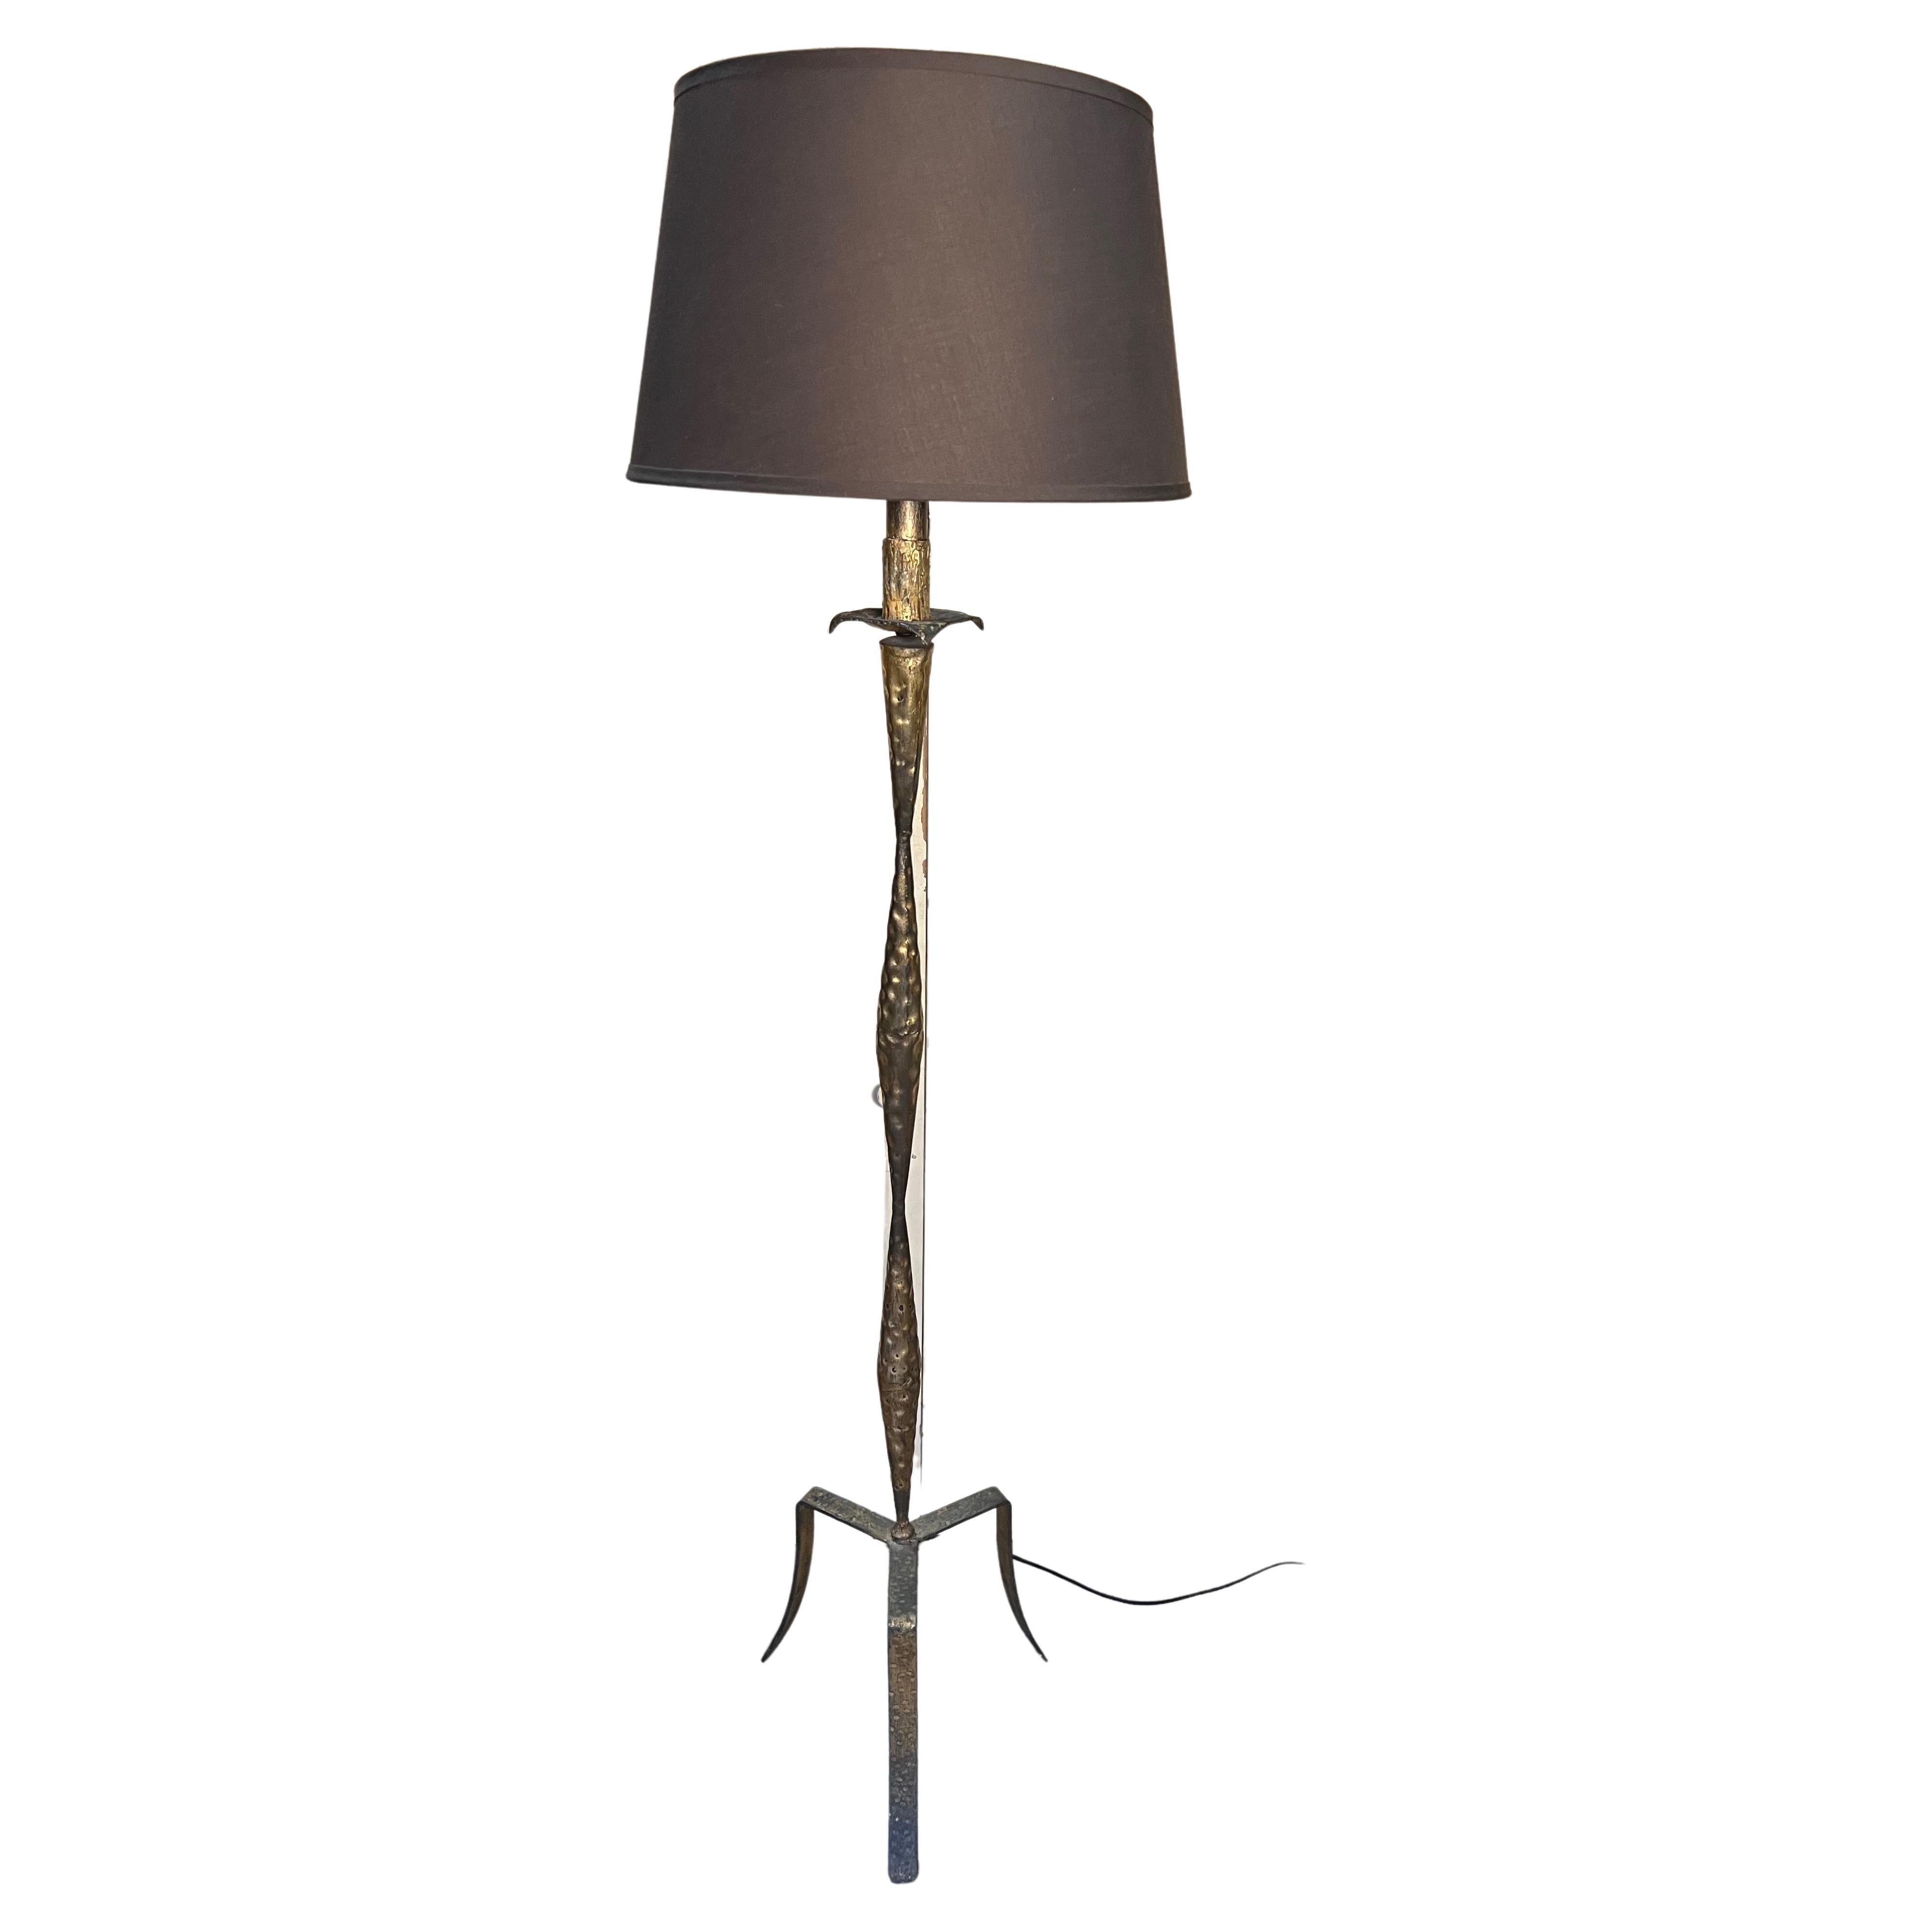 Spanish Gilt Iron Floor Lamp with Tripod Base For Sale